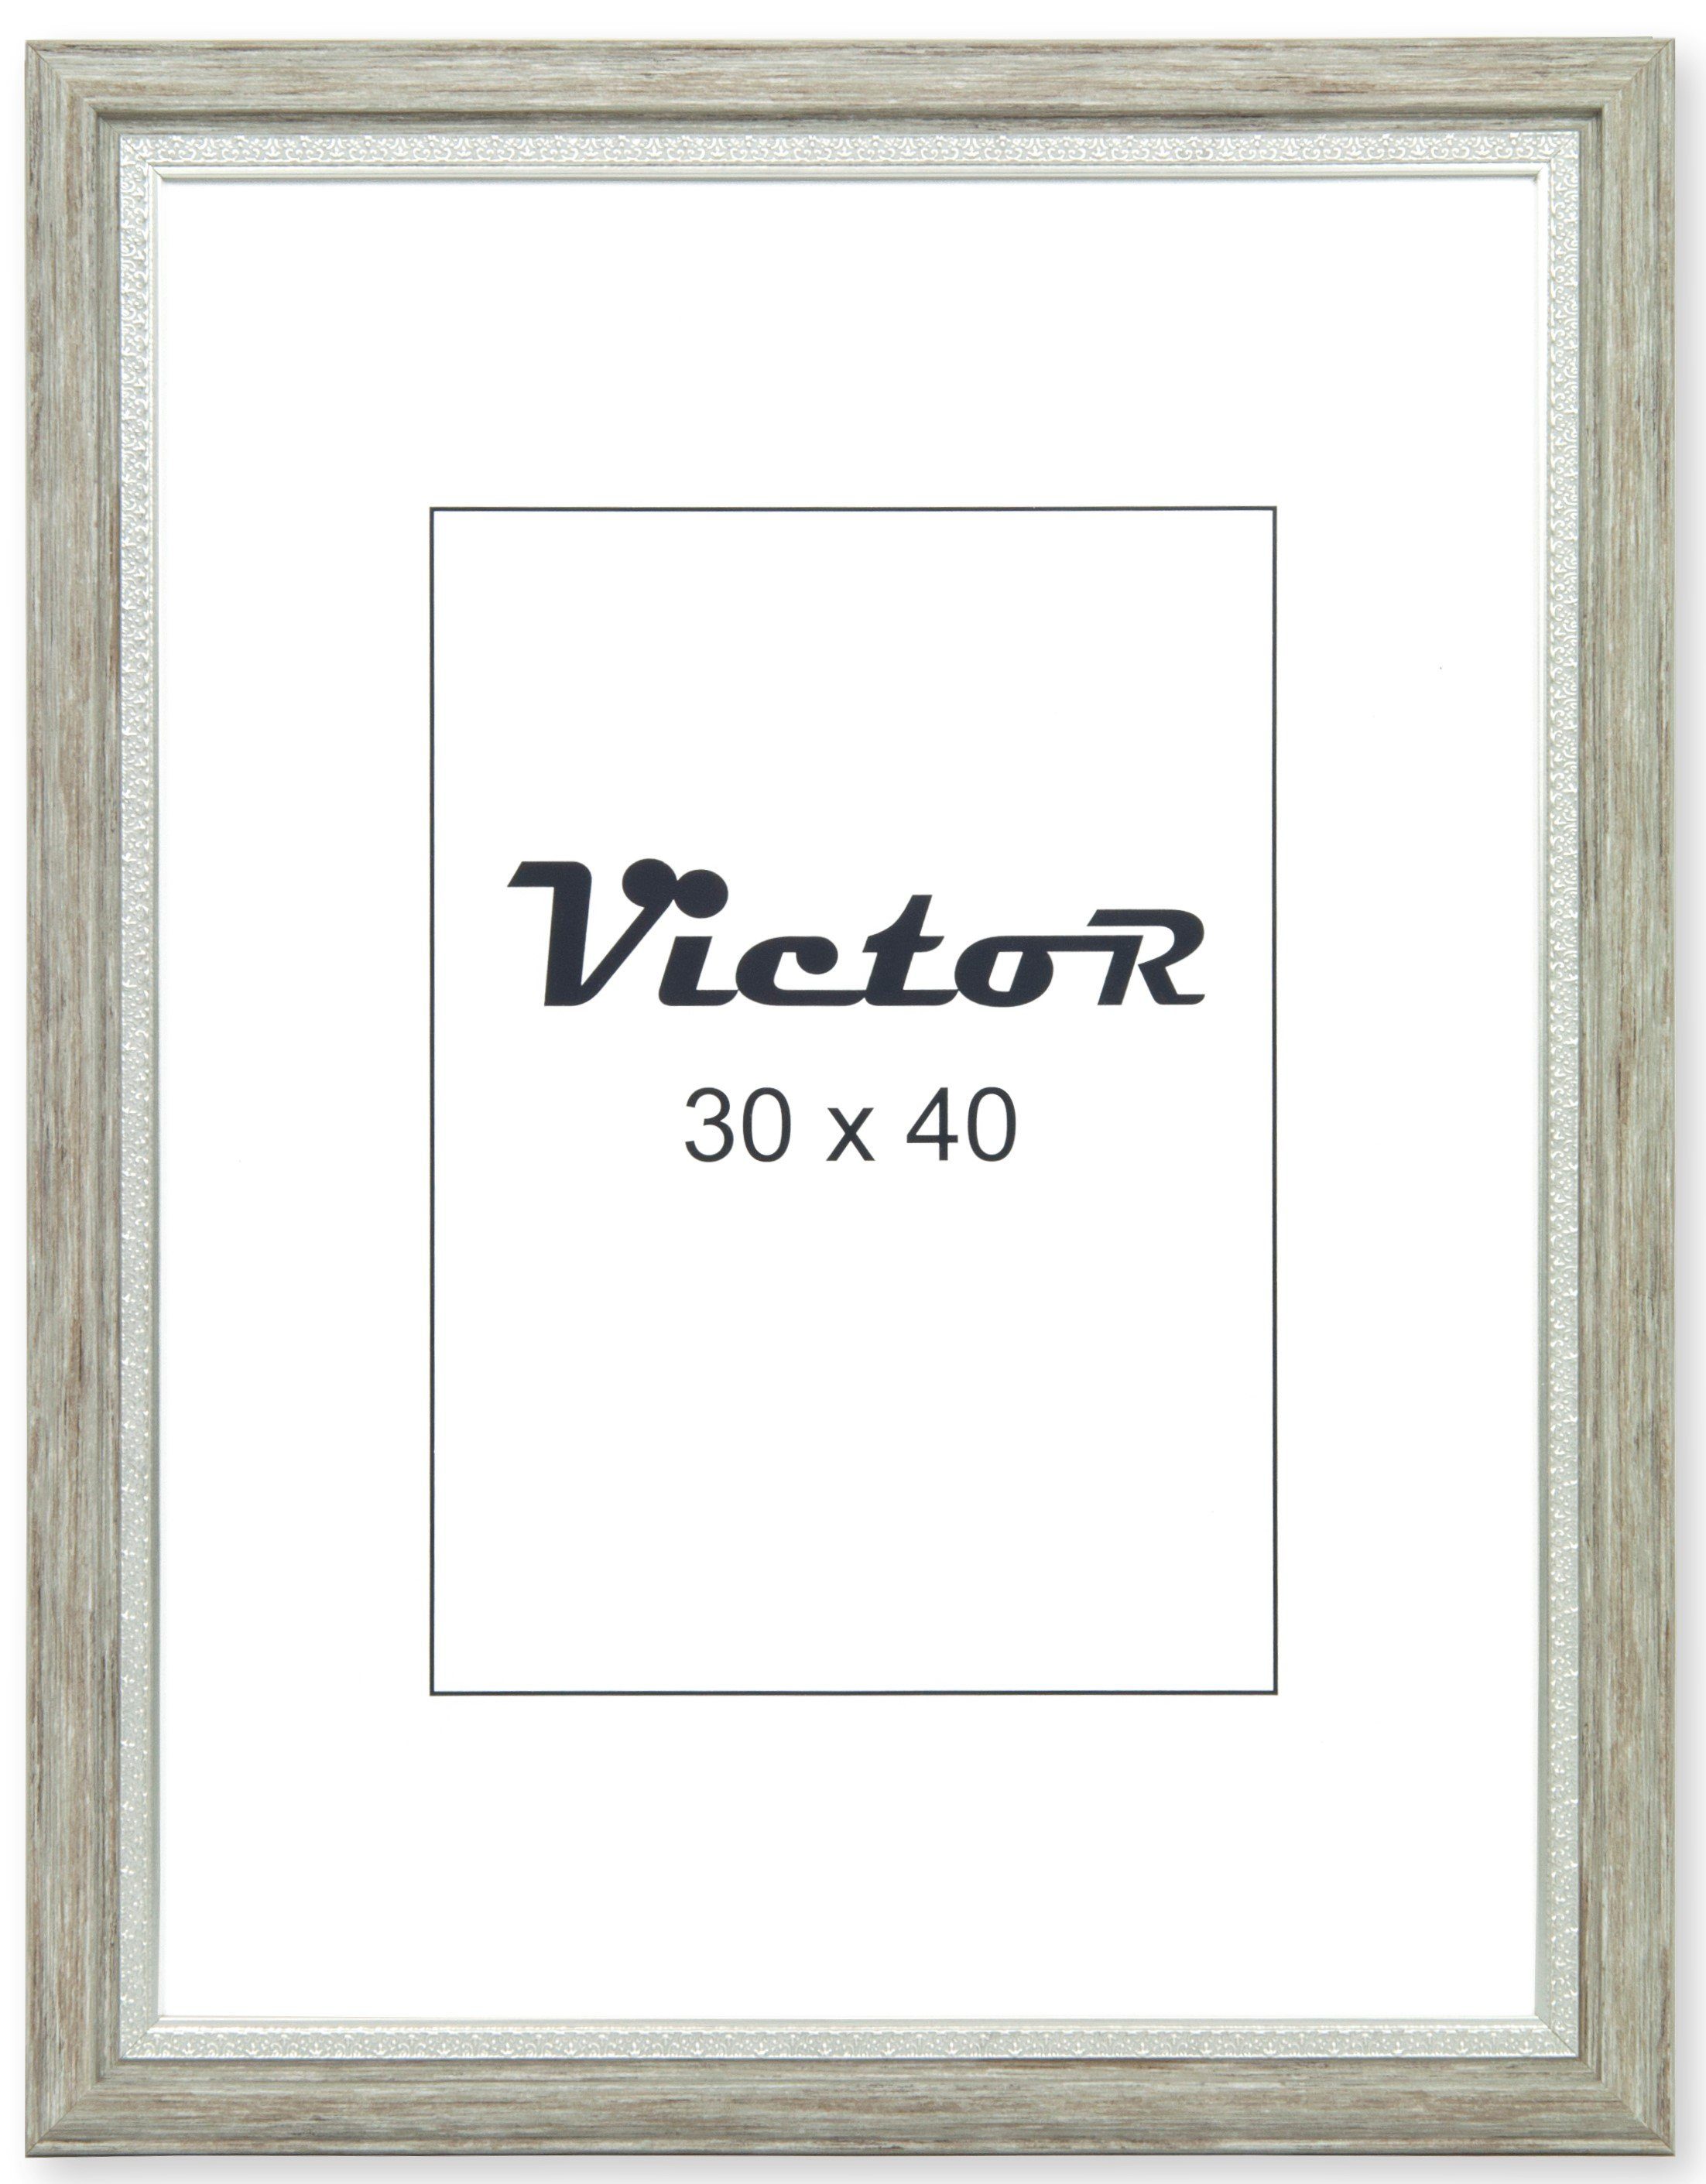 Victor (Zenith) Bilderrahmen Bilderrahmen \"Boho\" - Farbe: Grau - Größe: 30 x 40 cm, Bilderrahmen Grau 30x40 cm (A3), Bilderrahmen Vintage, Landhaus